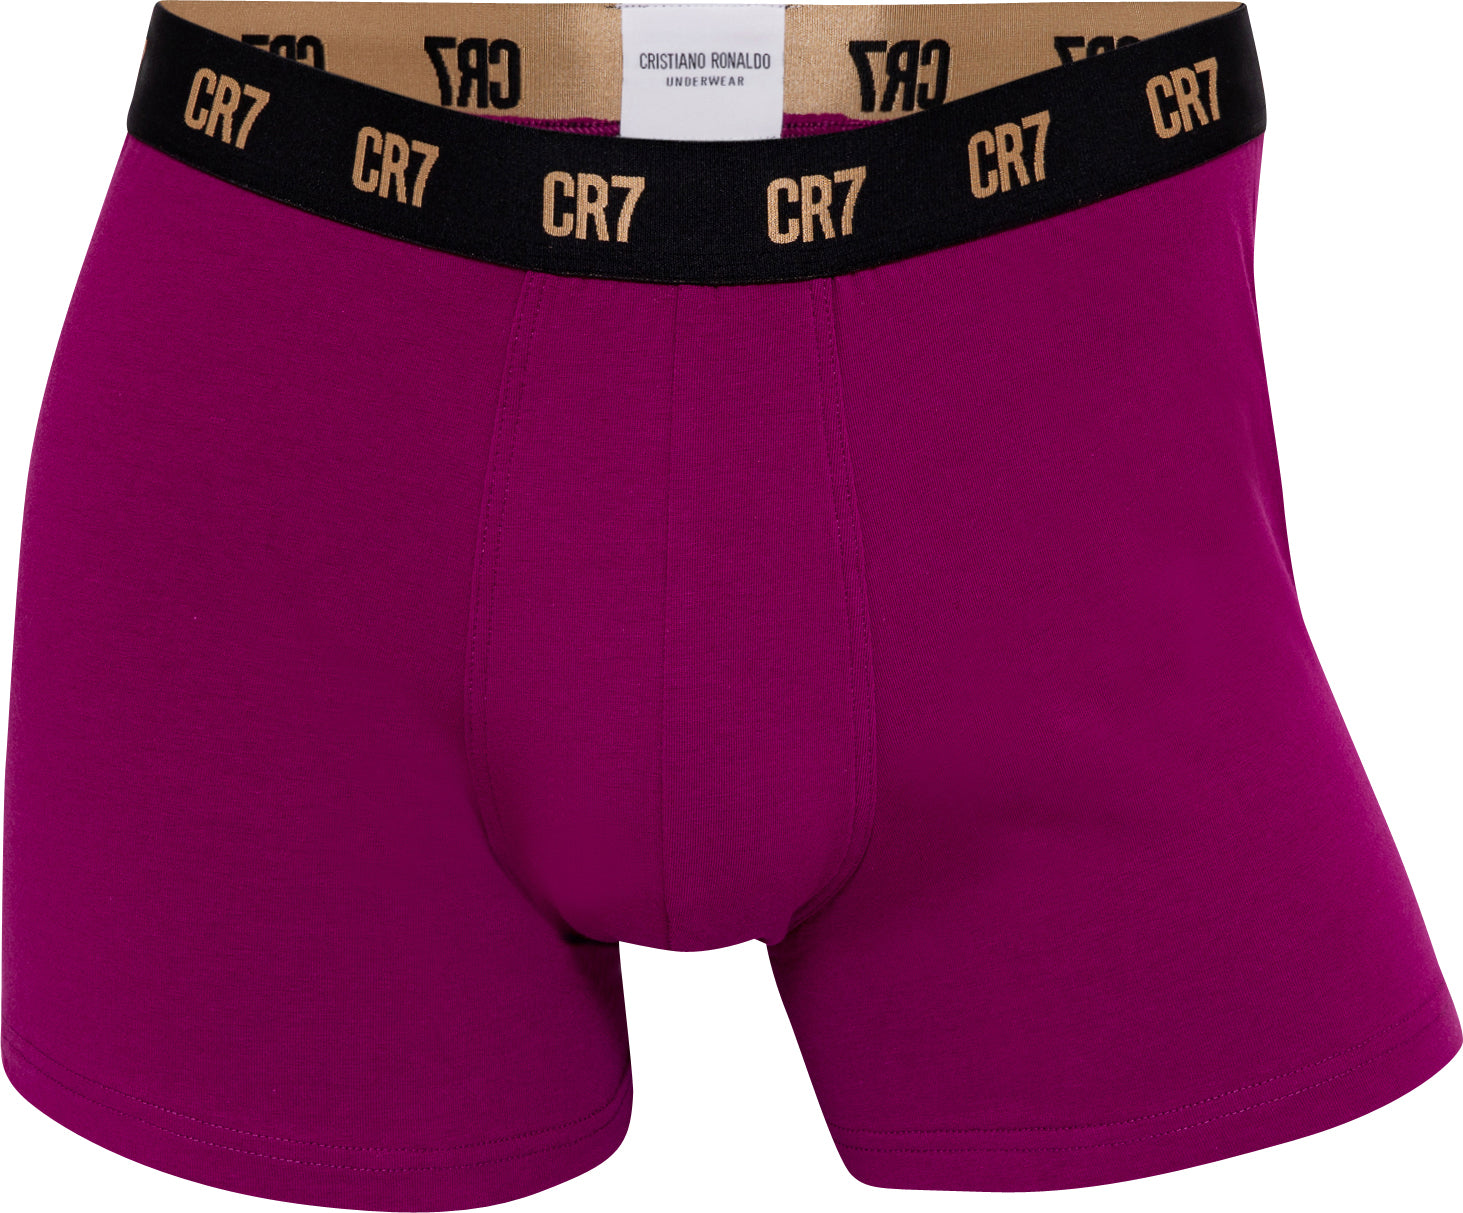 3-pack Cotton Republic men's underwear cotton basic sweat-absorbent  breathable briefs boxed 01111421